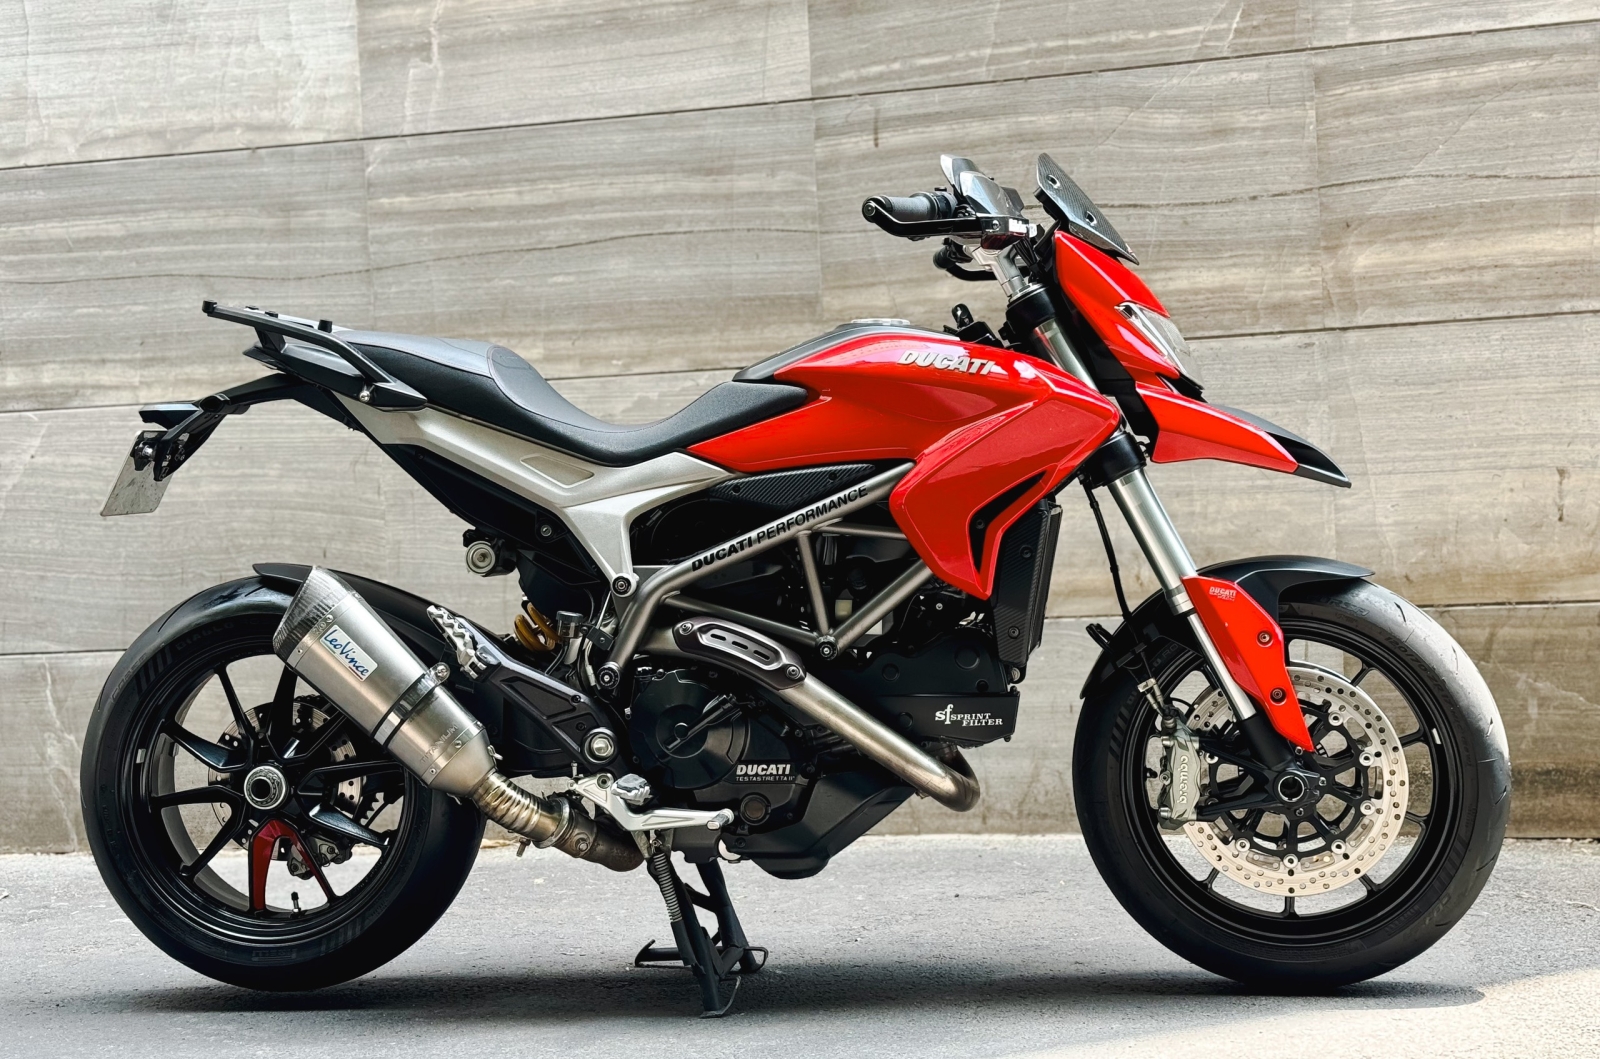 547 . Ducati Hyperstrada 821 model 2015 